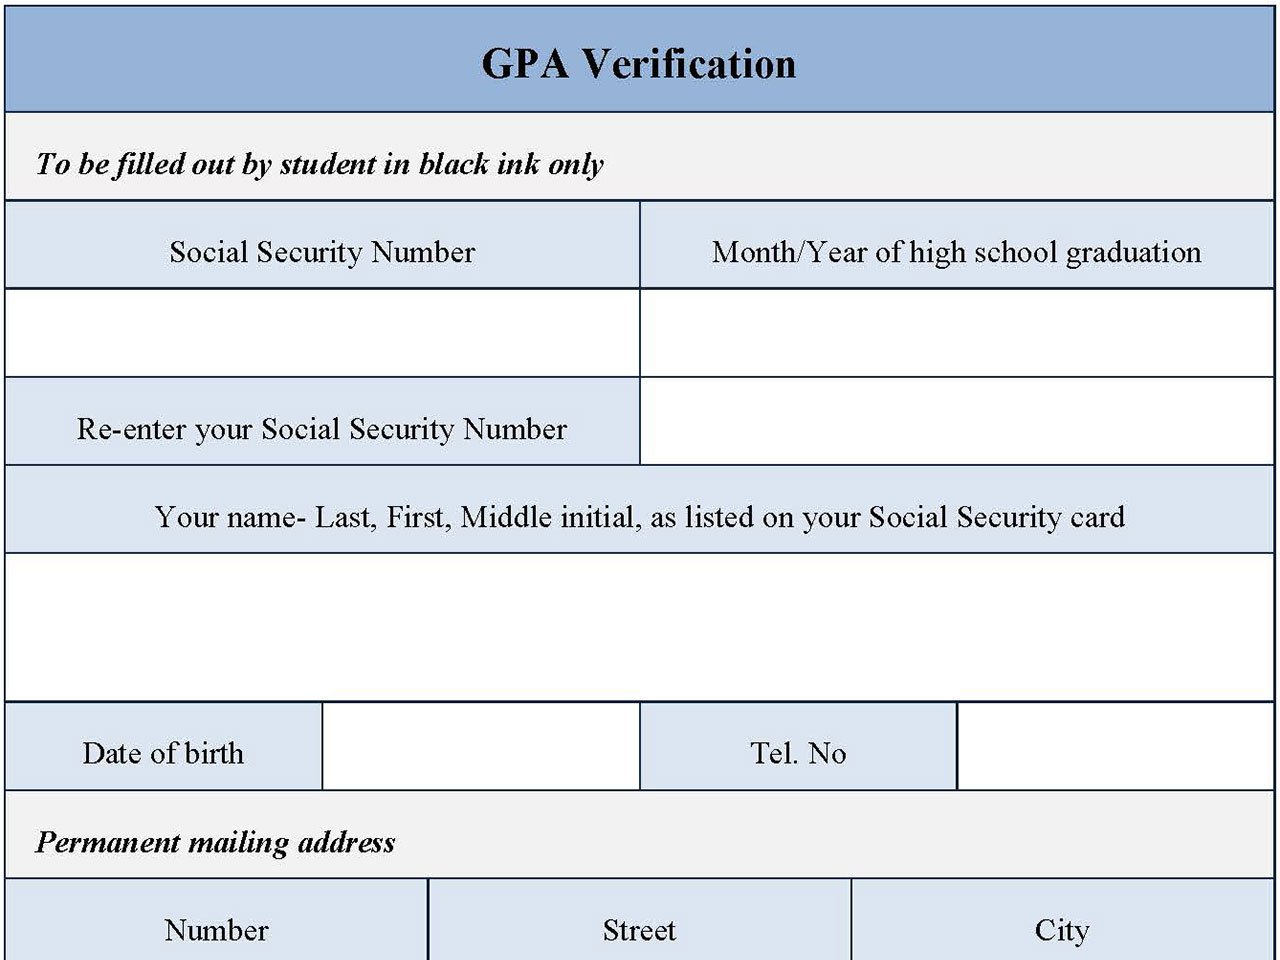 GPA Verification Form